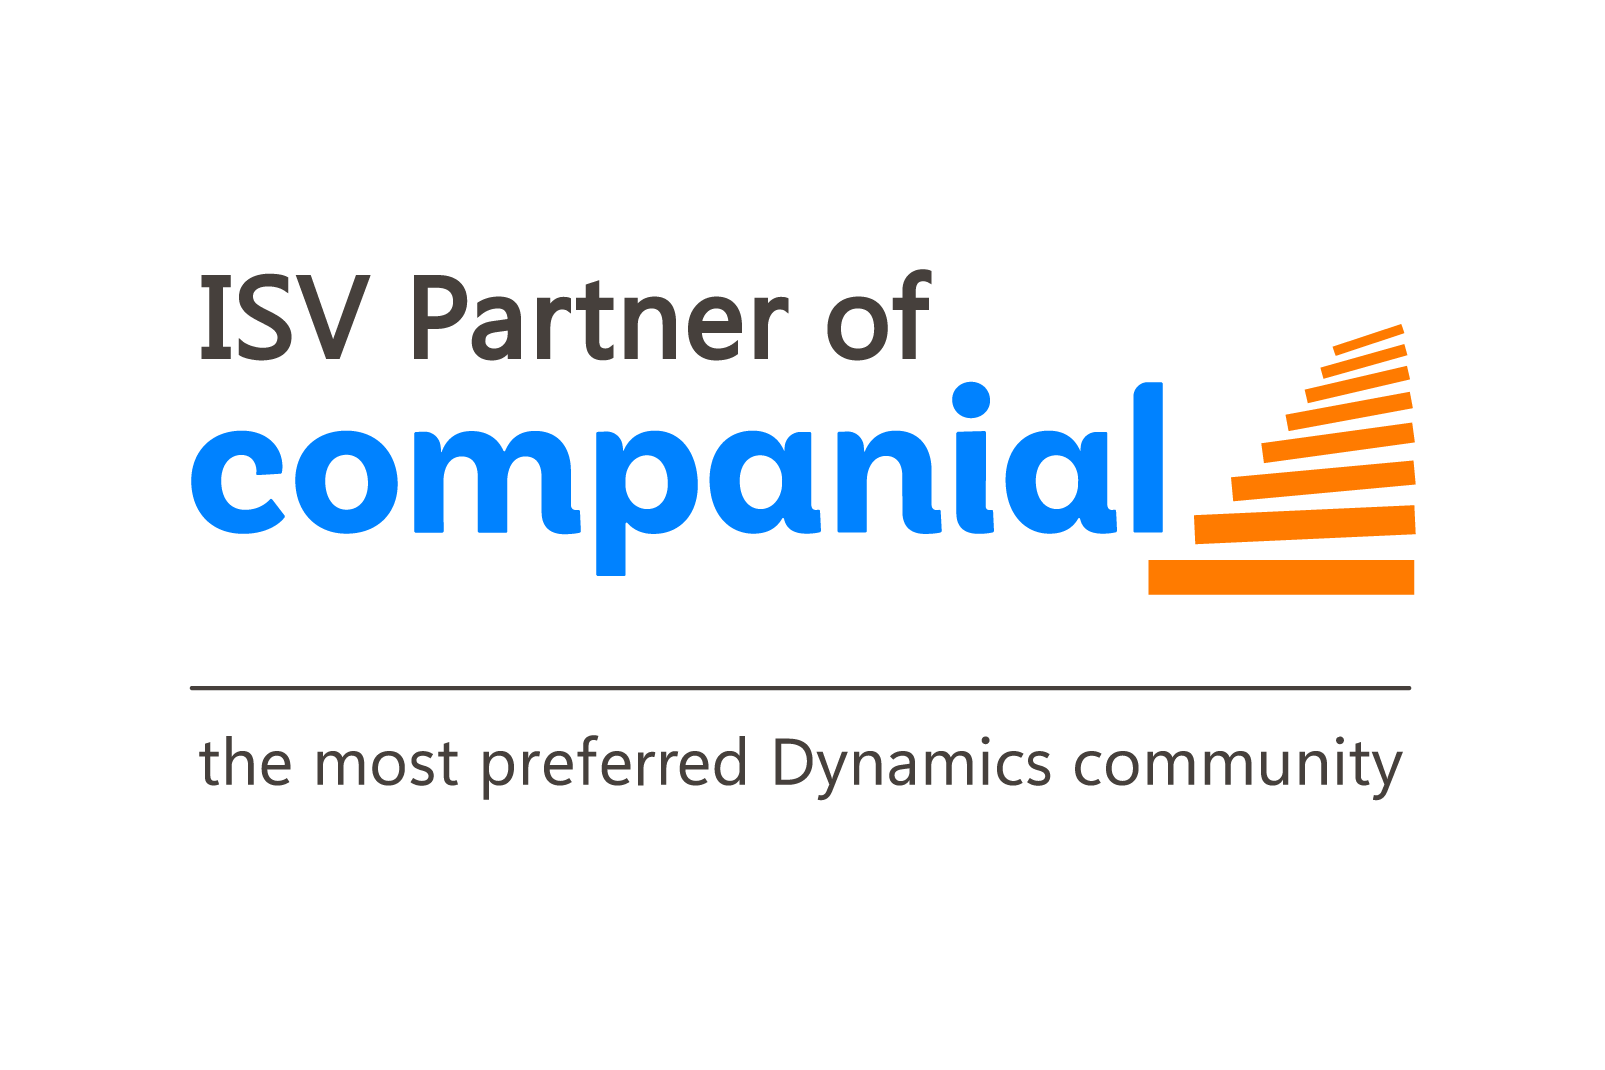 ISV Partner of Companial